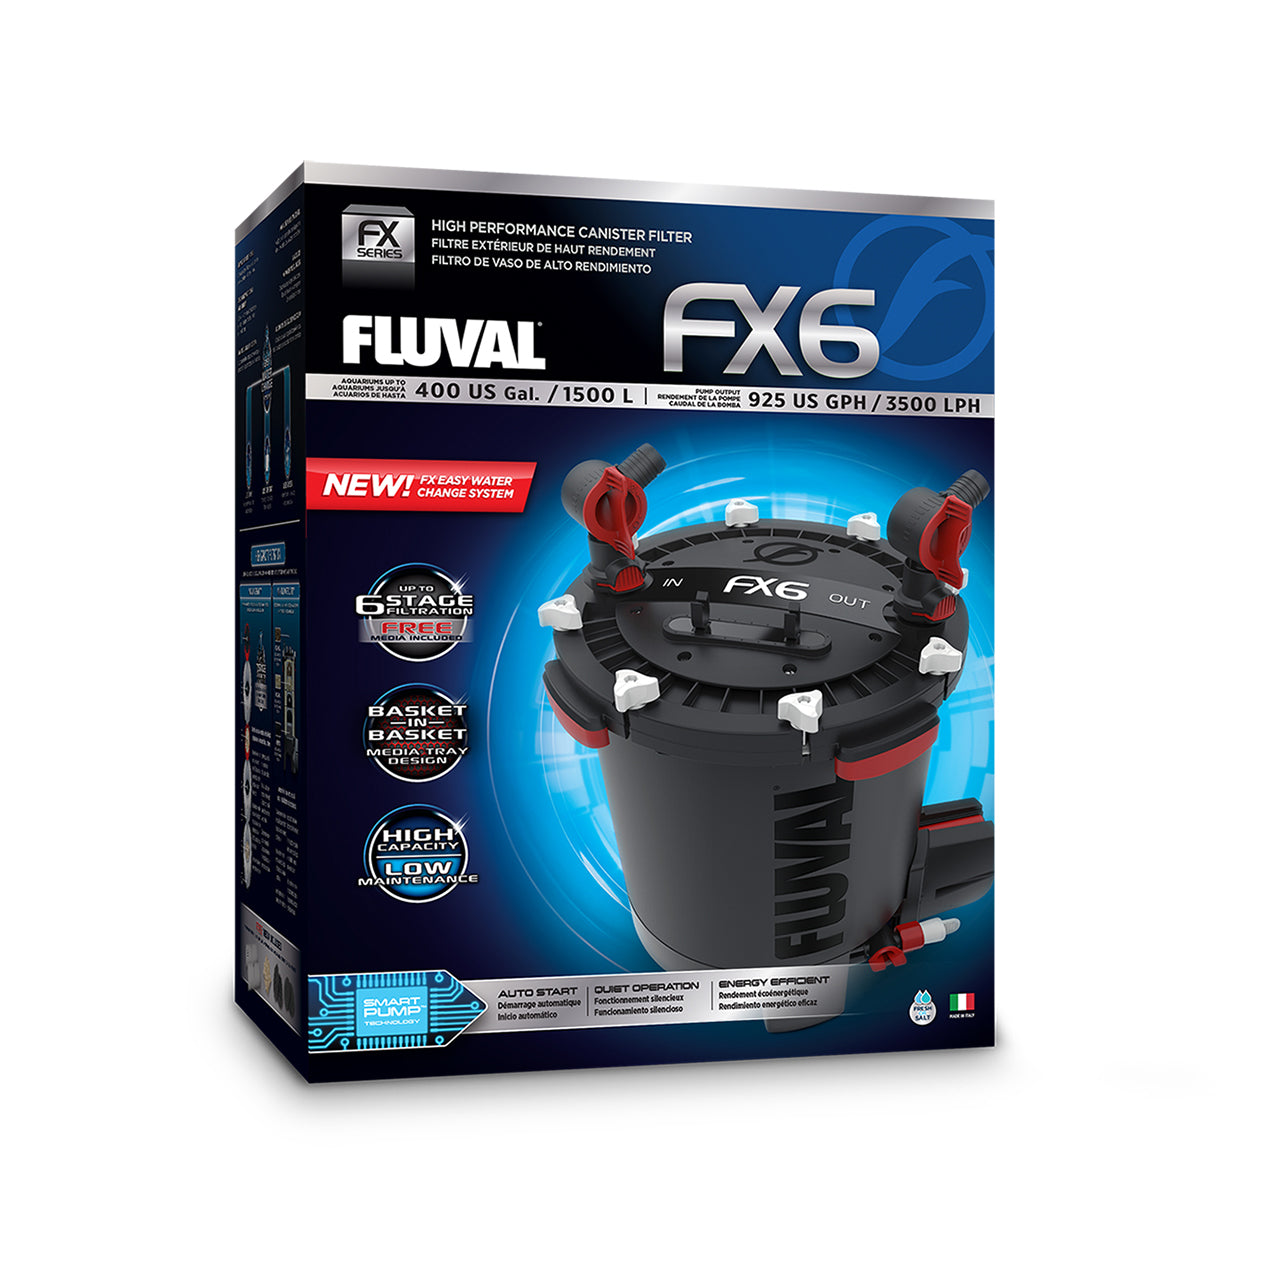 Fluval FX Series High Performance Canister Filter